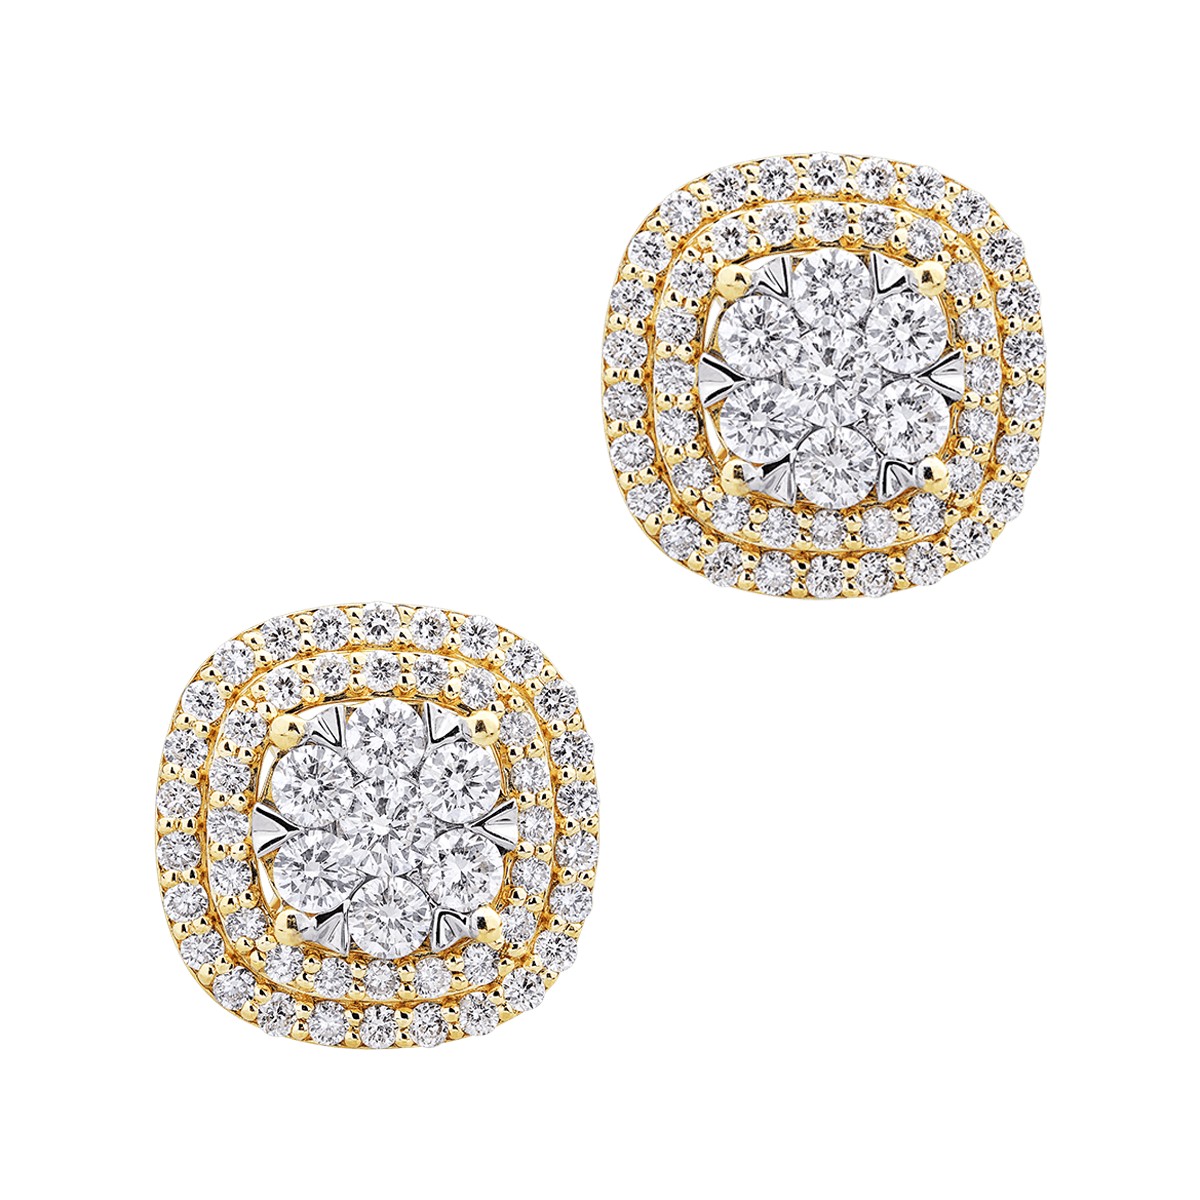 18K yellow gold earrings with 1.5ct diamonds